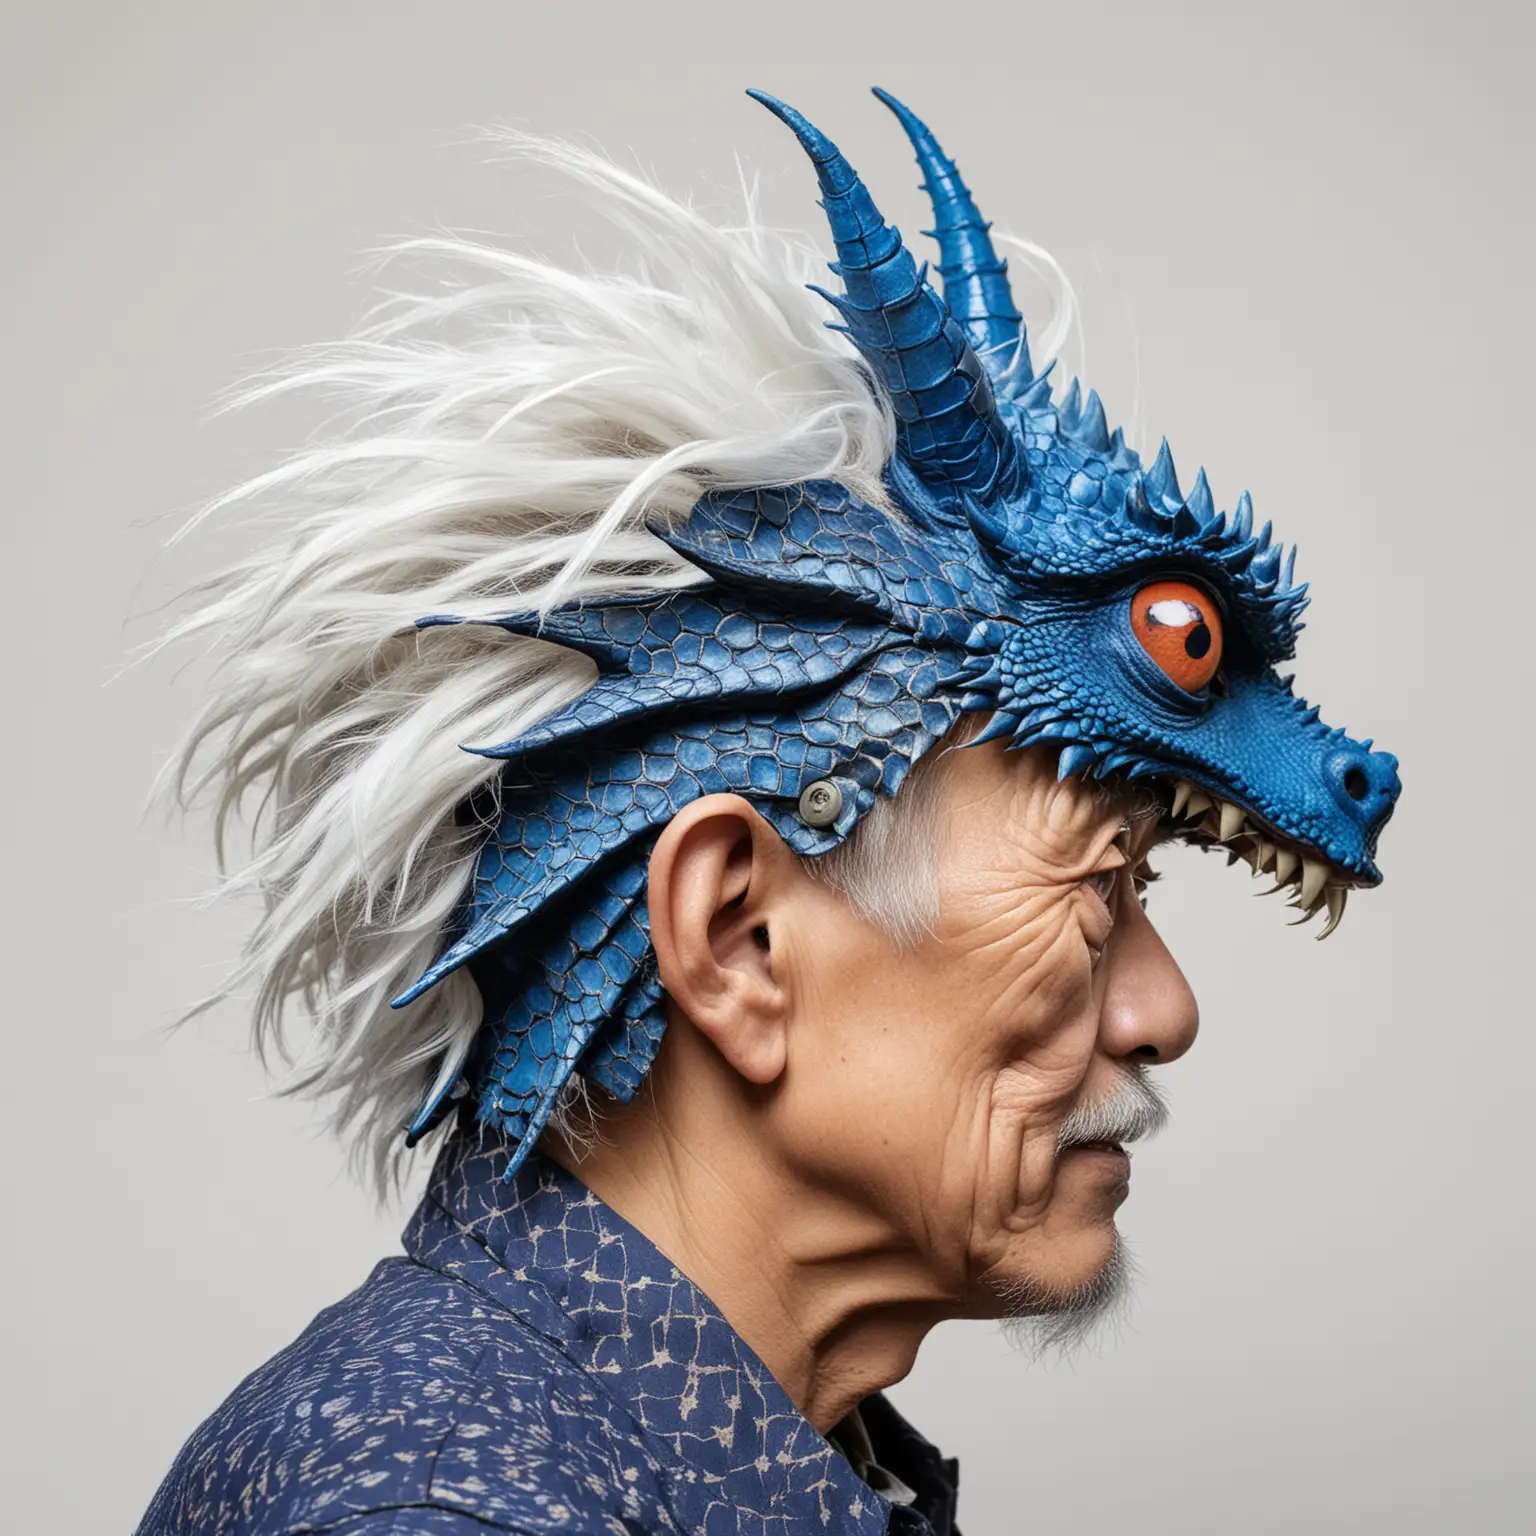 Portrait of Old Japanese Man with Einstein Hair and Dragon Helmet